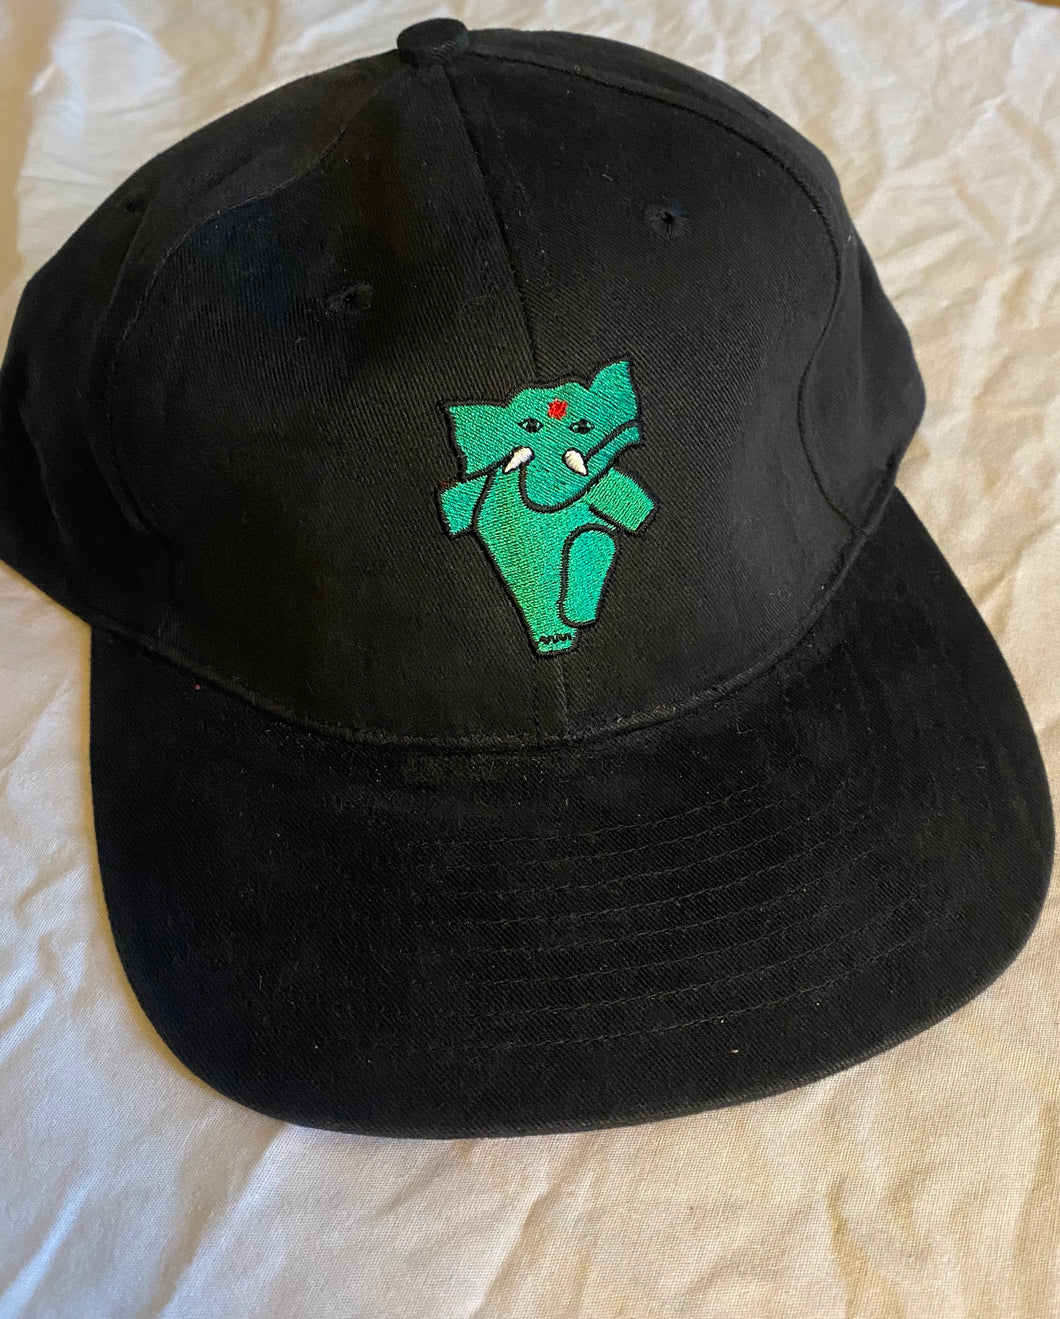 RARE green Appa on black hat